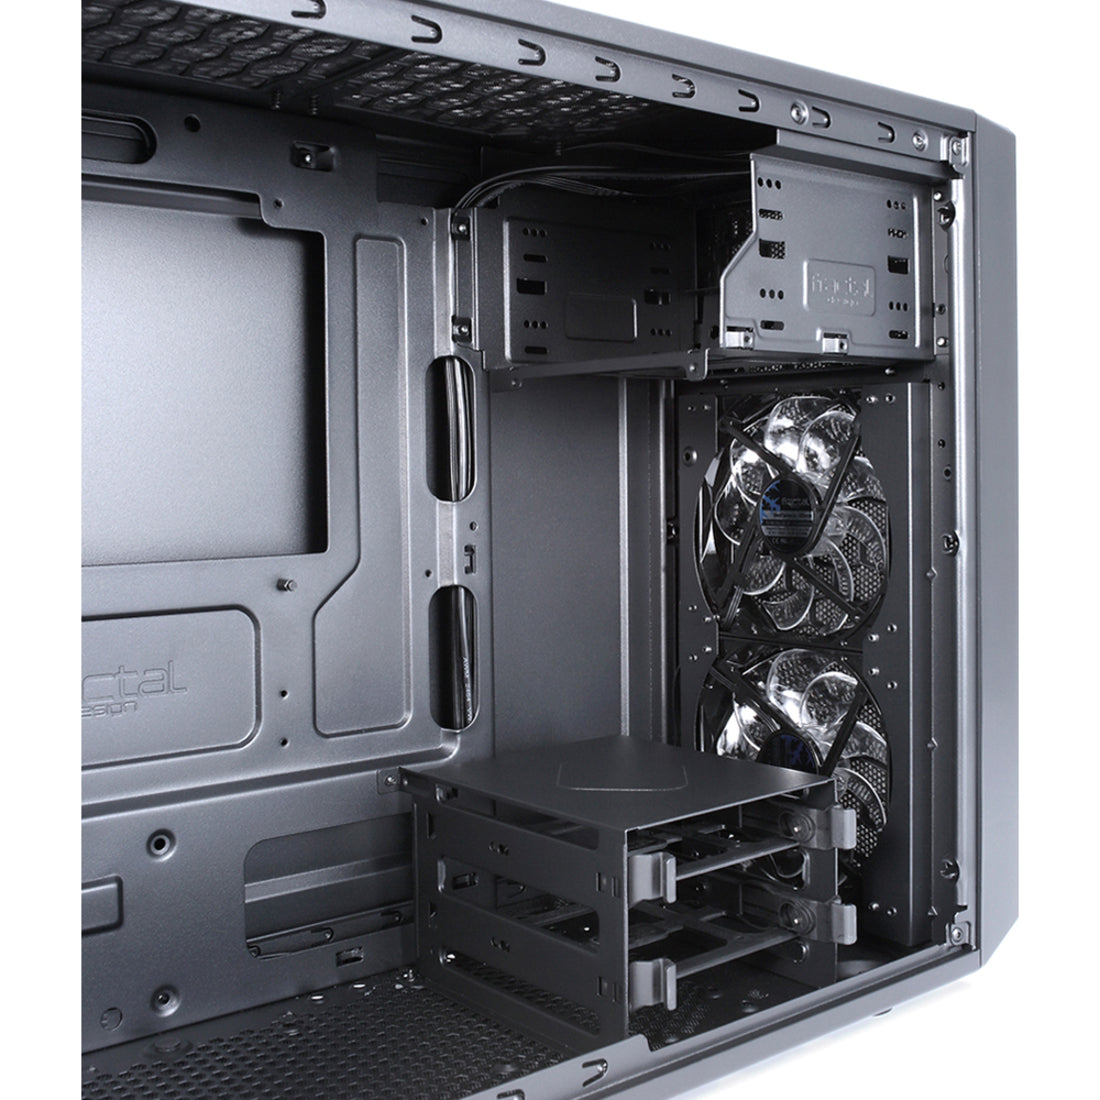 Fractal Design FD-CA-FOCUS-BK-W Focus G Computer Case with Side Window, Mid-tower, Black, 5 Expansion Bays, 2 USB Ports